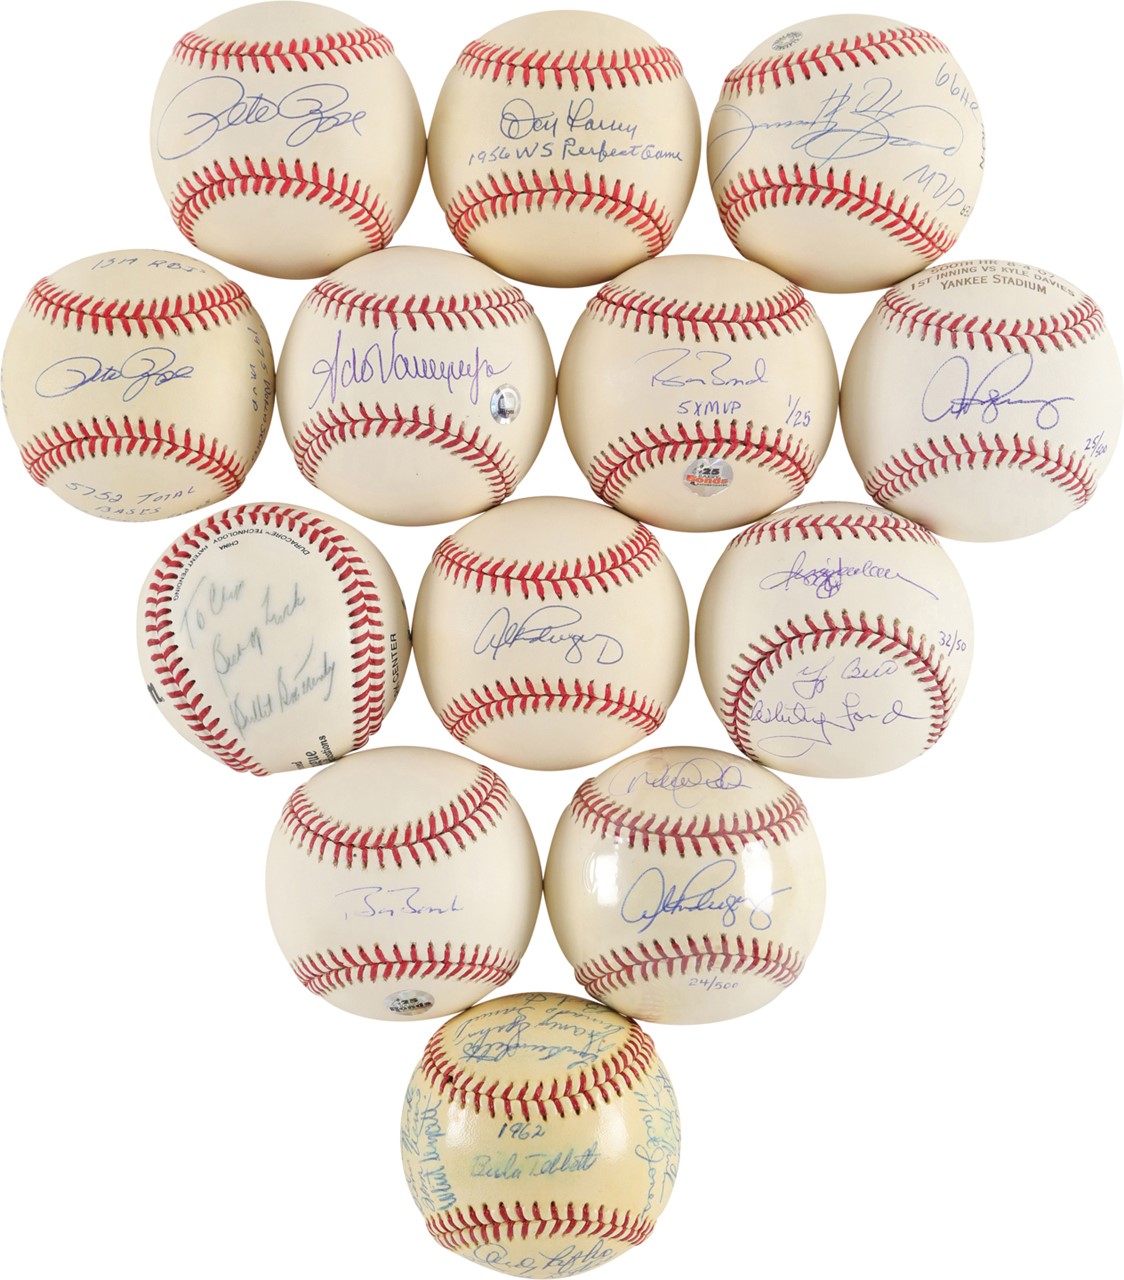 Baseball Legends and Stars Signed Baseball Collection w/Derek Jeter (25)